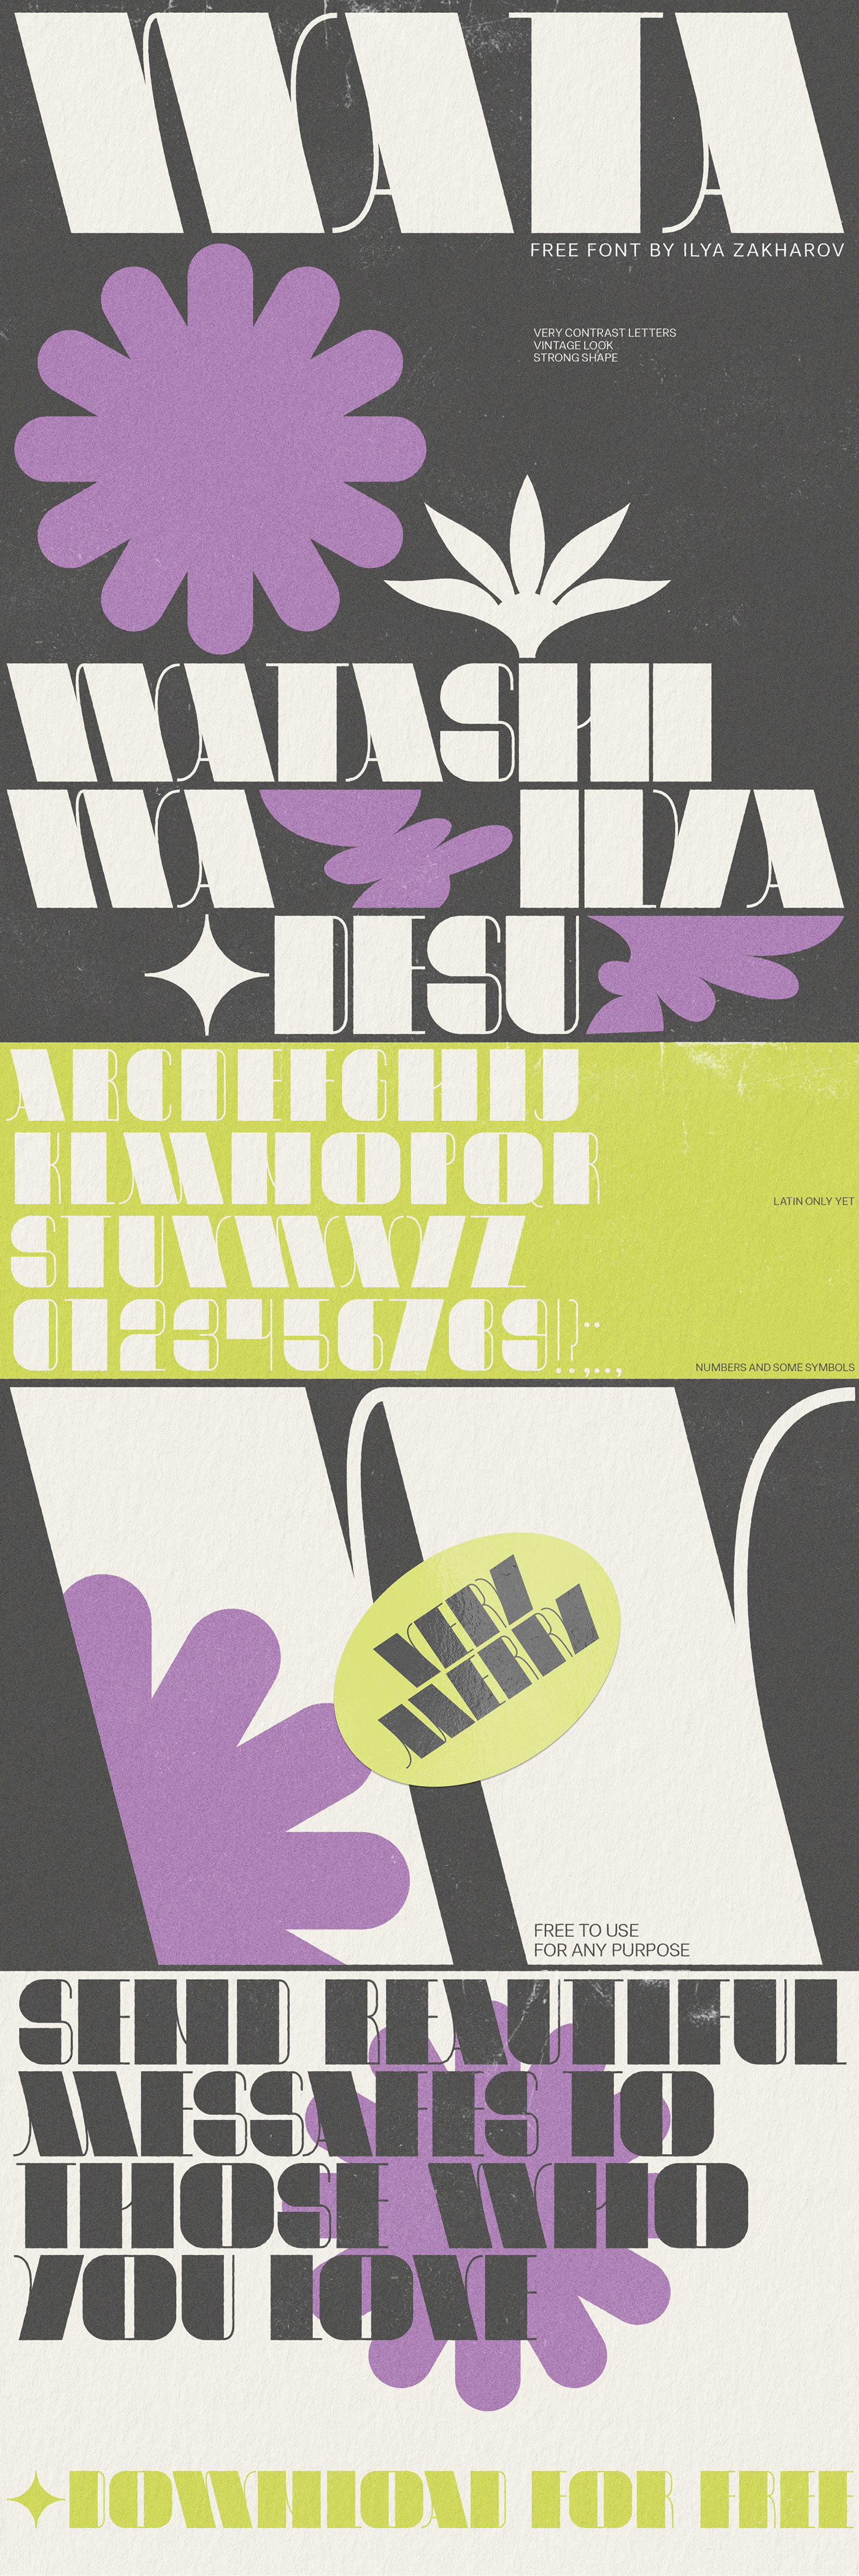 font free freebie print Retro Typeface typography   vector vintage wata